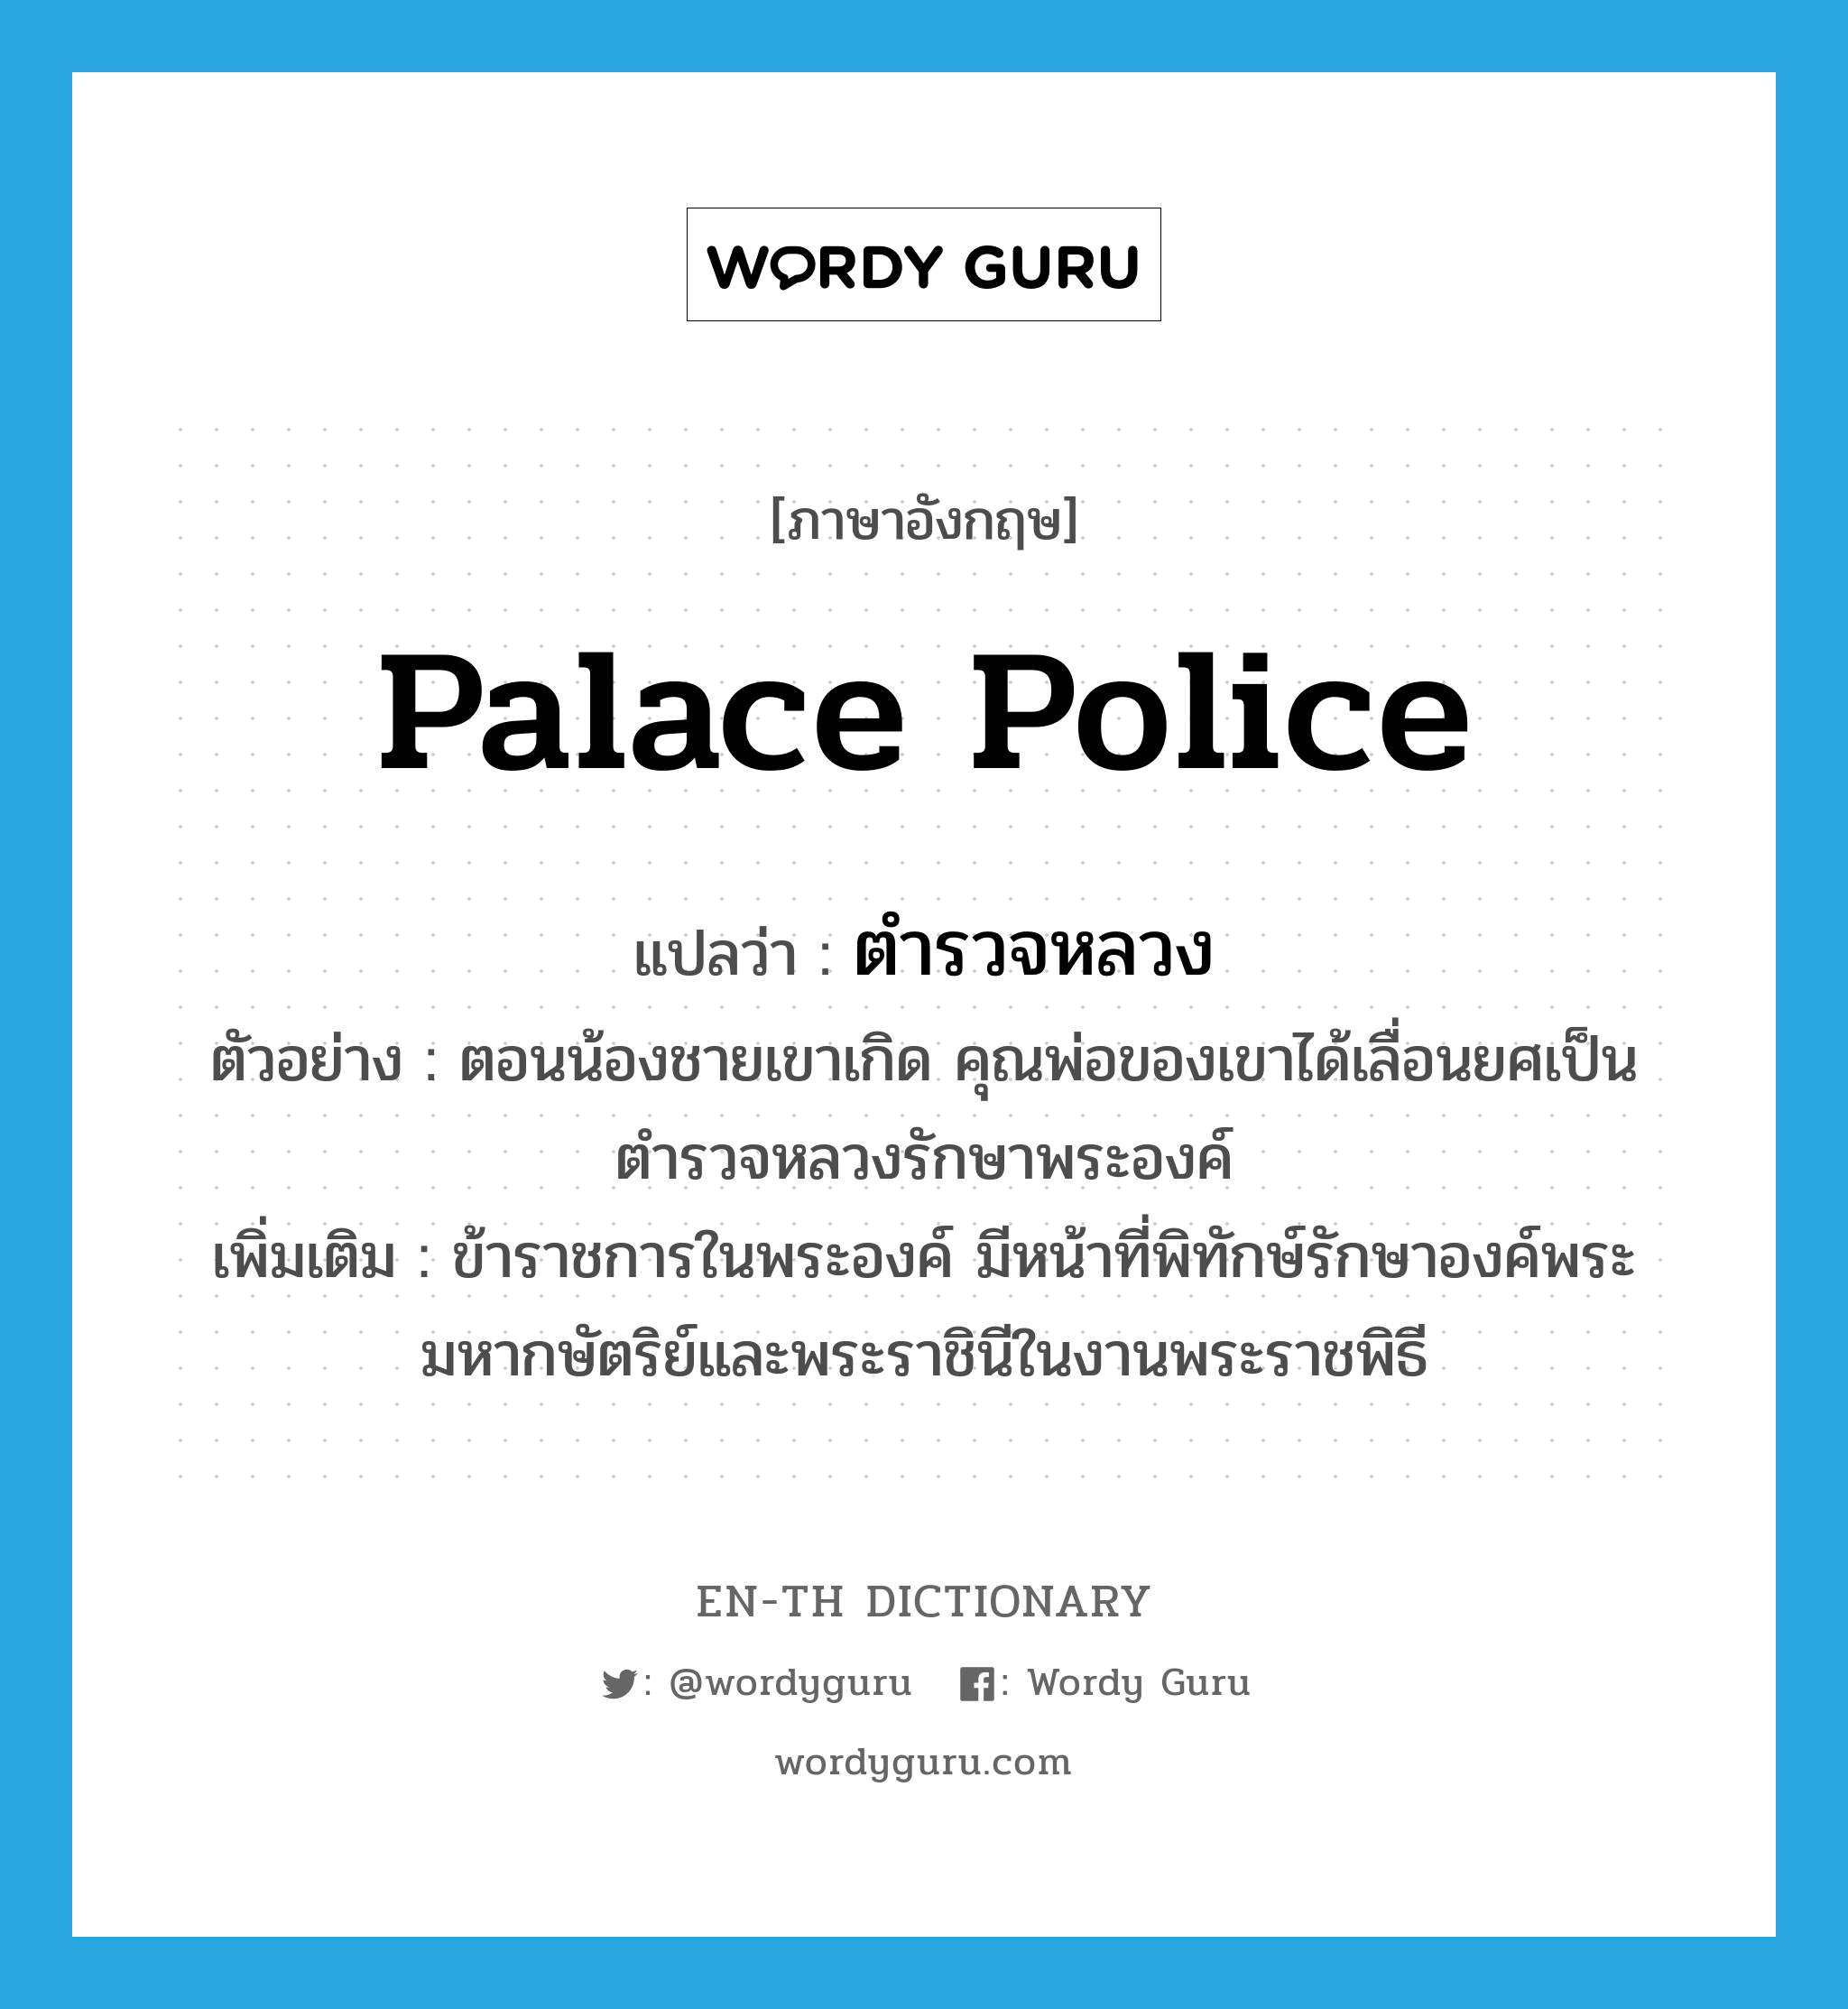 palace police แปลว่า?, คำศัพท์ภาษาอังกฤษ palace police แปลว่า ตำรวจหลวง ประเภท N ตัวอย่าง ตอนน้องชายเขาเกิด คุณพ่อของเขาได้เลื่อนยศเป็นตำรวจหลวงรักษาพระองค์ เพิ่มเติม ข้าราชการในพระองค์ มีหน้าที่พิทักษ์รักษาองค์พระมหากษัตริย์และพระราชินีในงานพระราชพิธี หมวด N